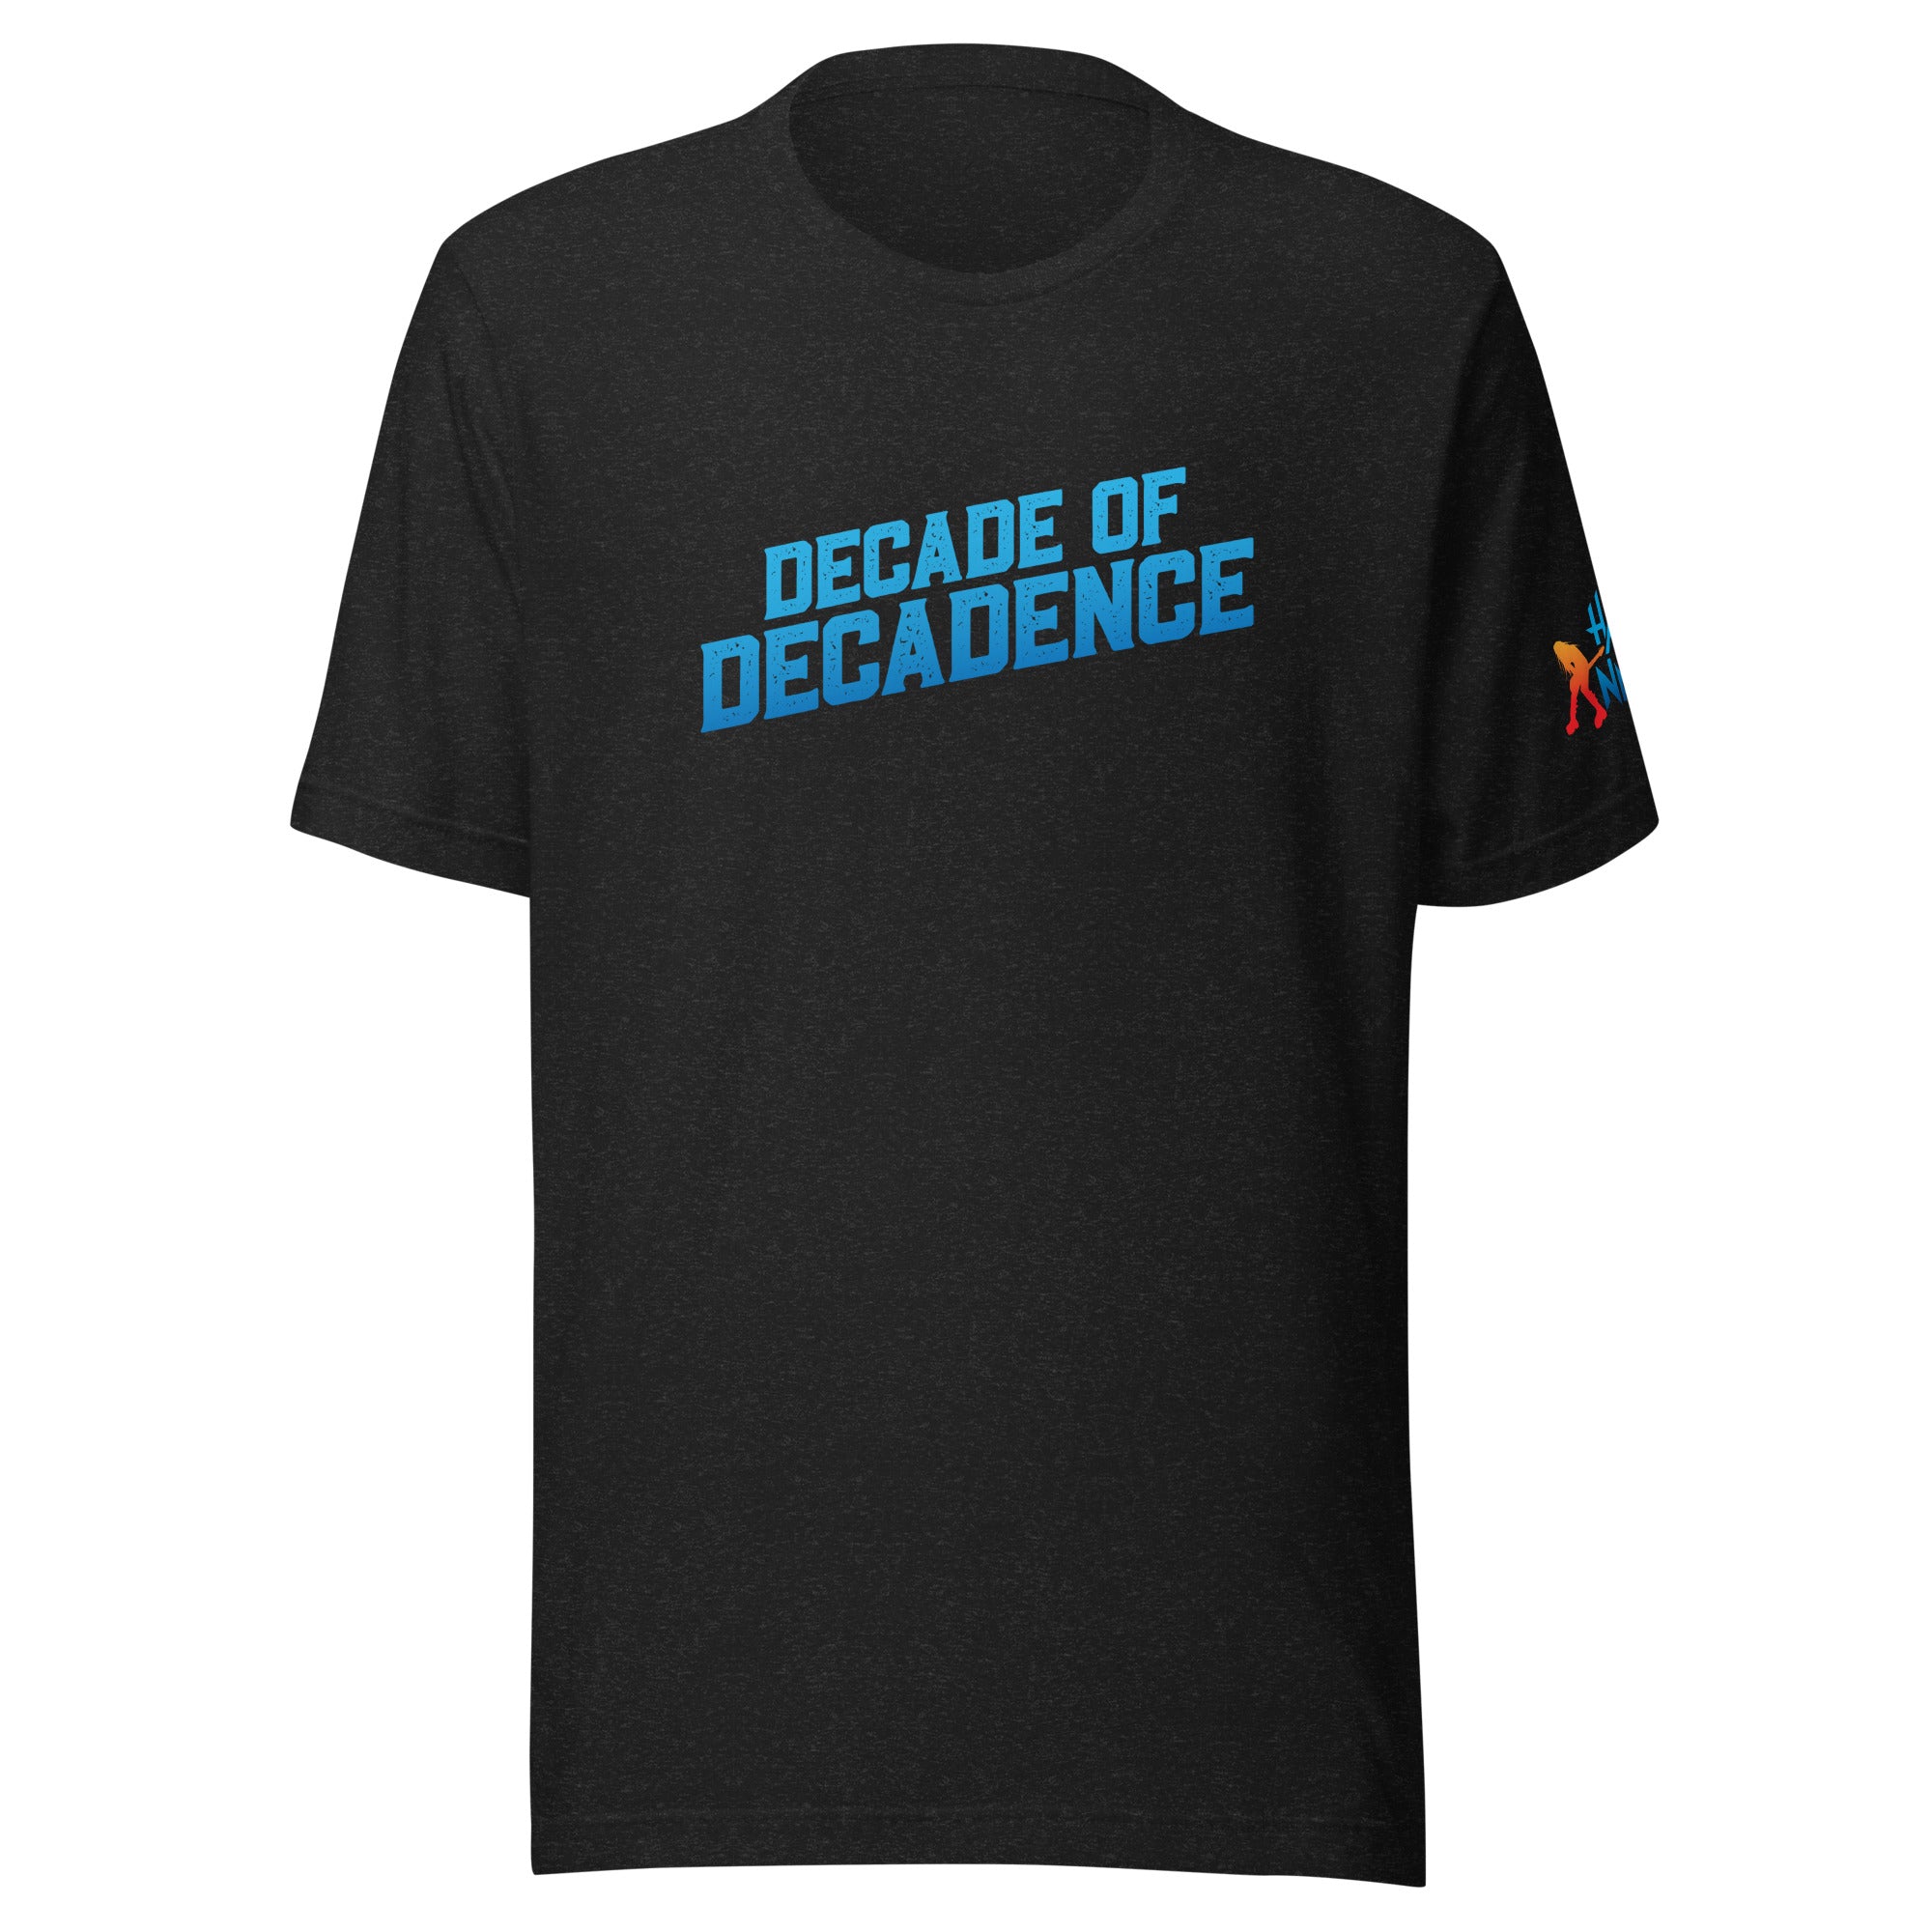 Hair Nation: Blue Decade of Decadence T-shirt